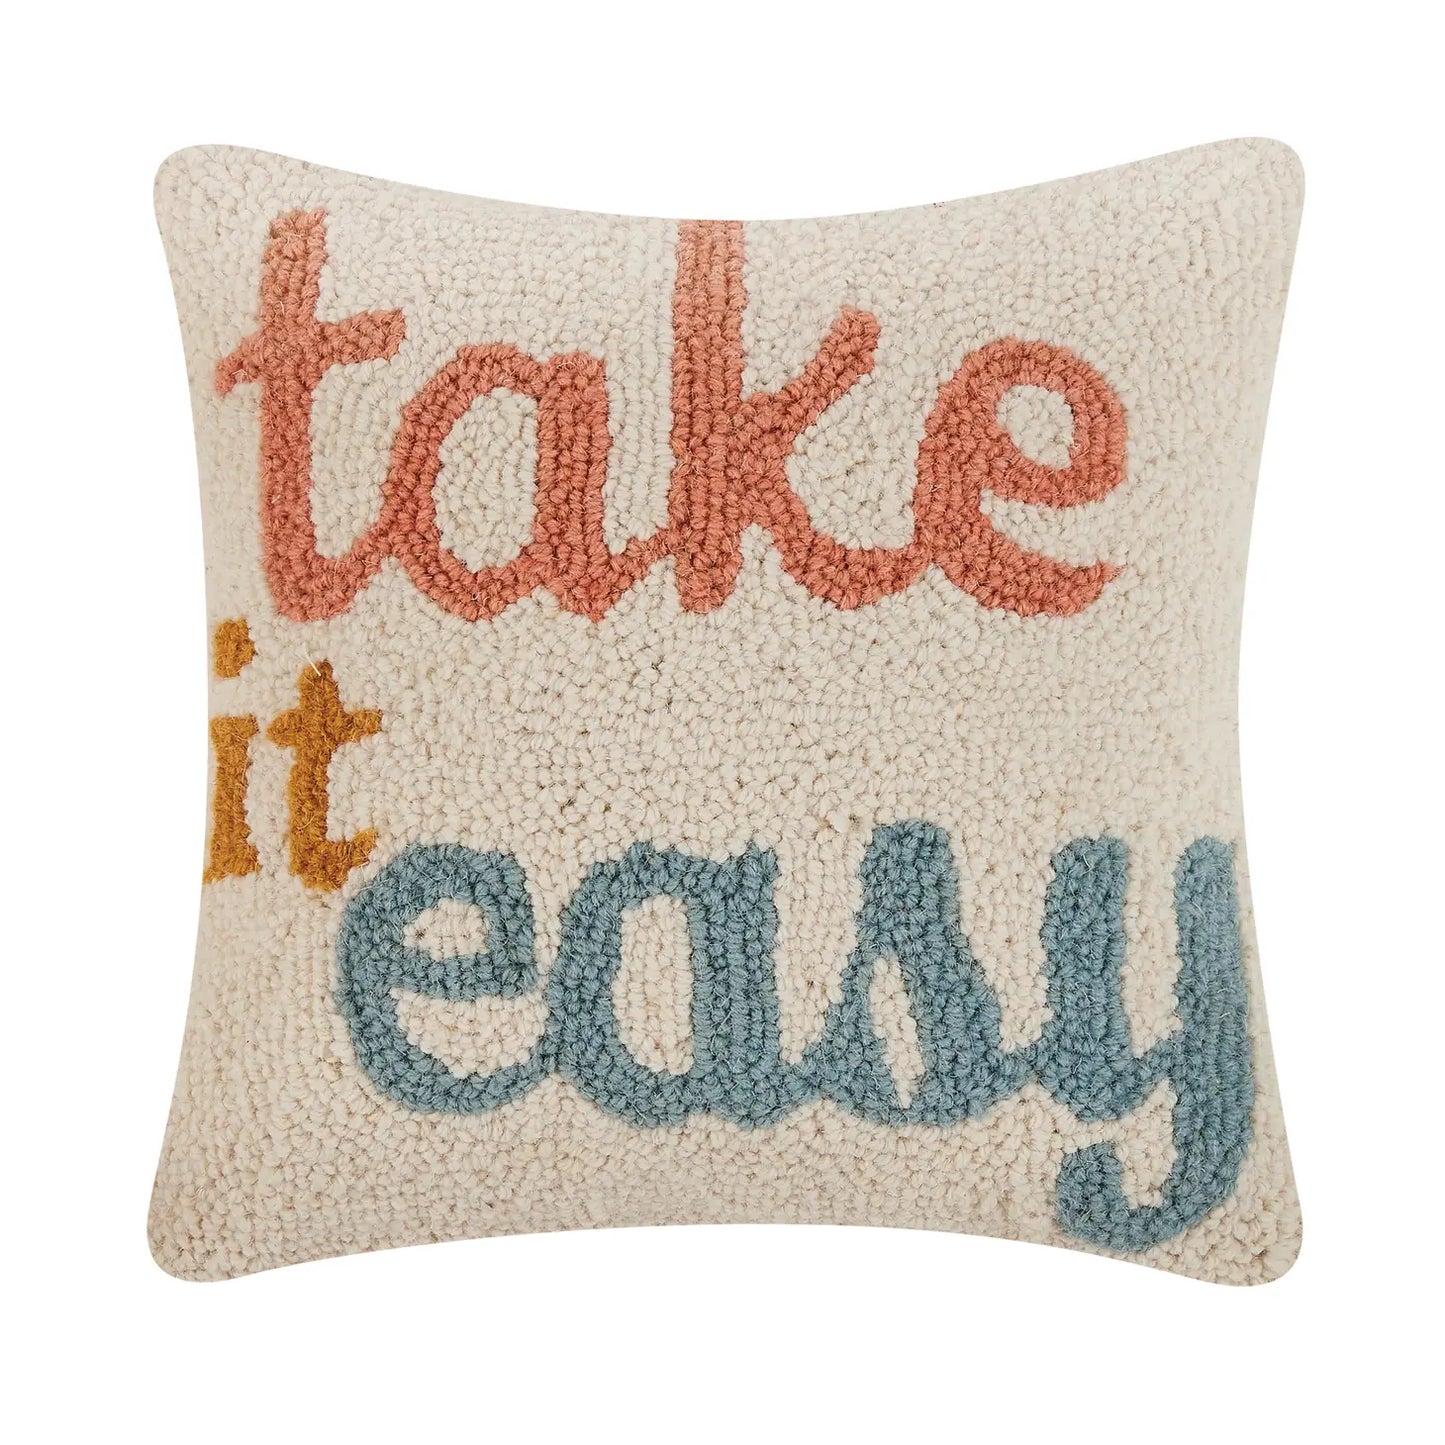 Take It Easy Cushion